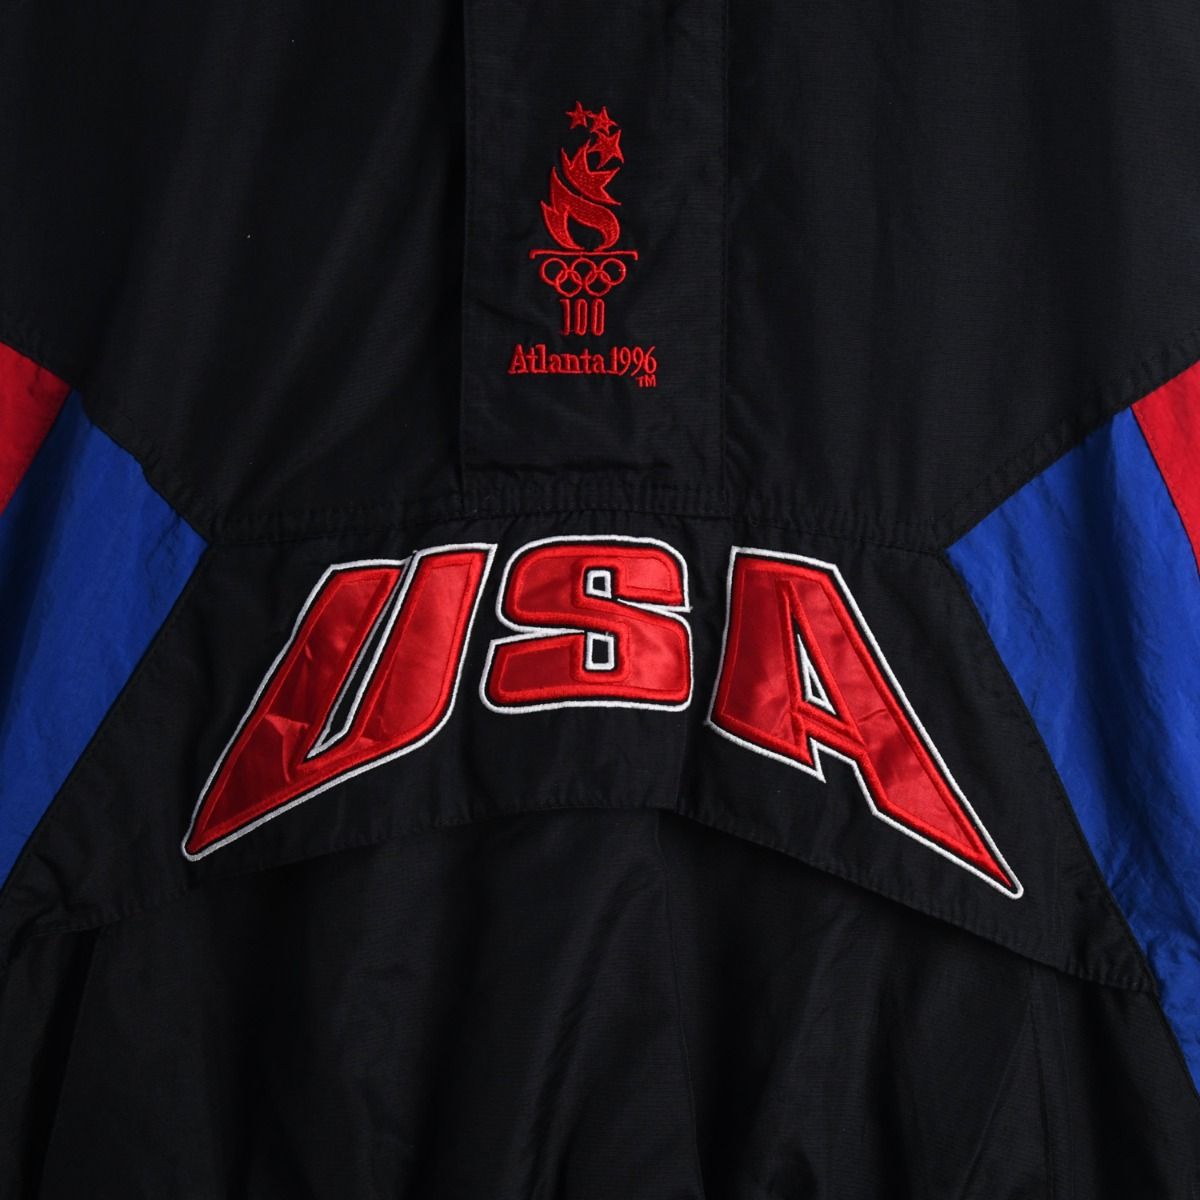 Atlanta 1996 Olympics X Starter Half-Zip Jacket